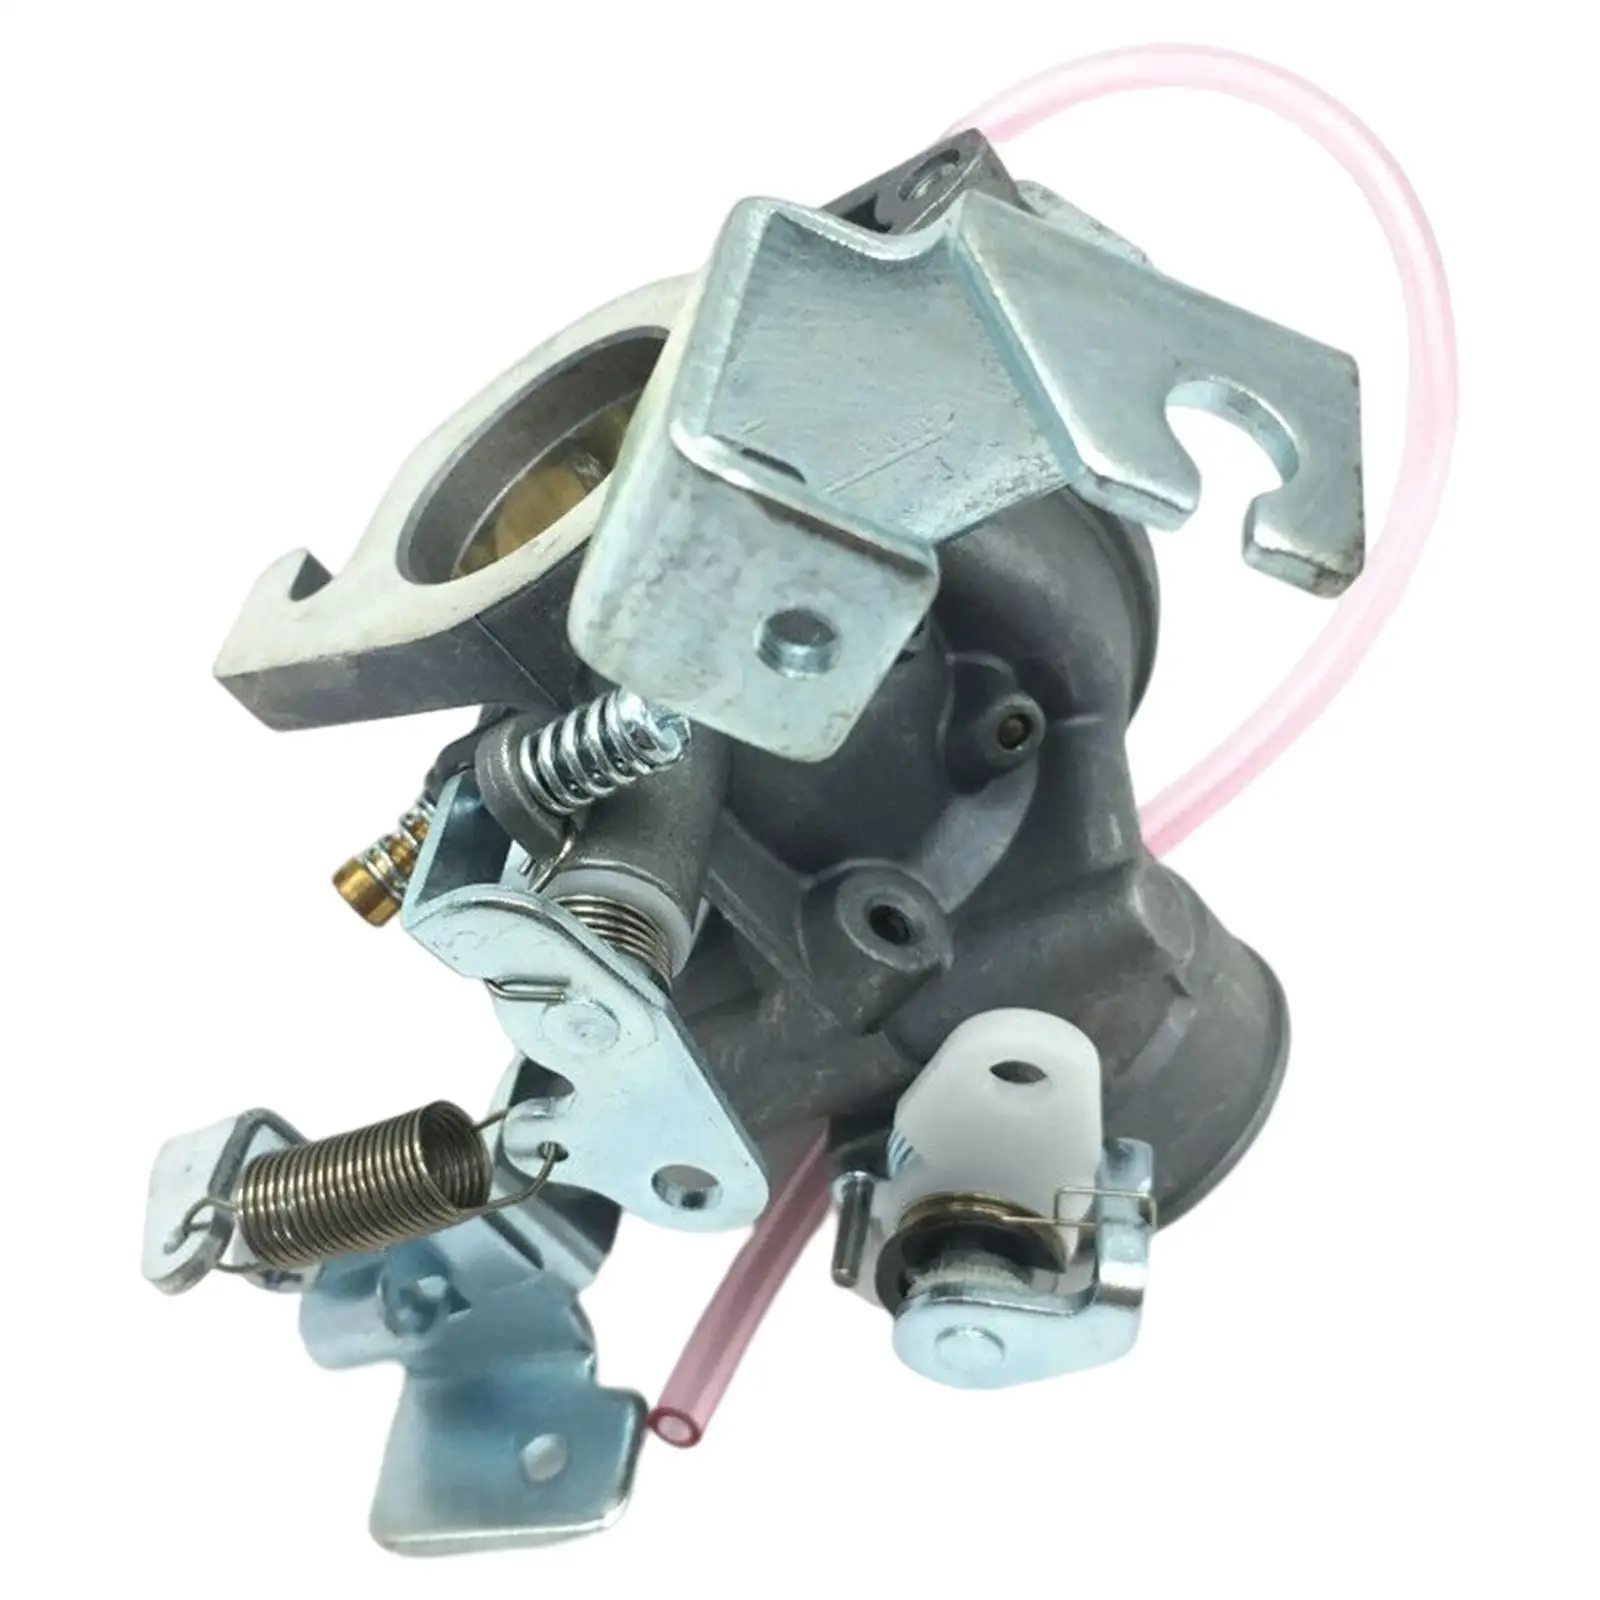 Automotive Carburetor Replacement J38-14101-01 J38-14101-00 J381410102 Fit for Yamaha Golf Cart G9 G2 G11 4 Cycle Stroke Engine